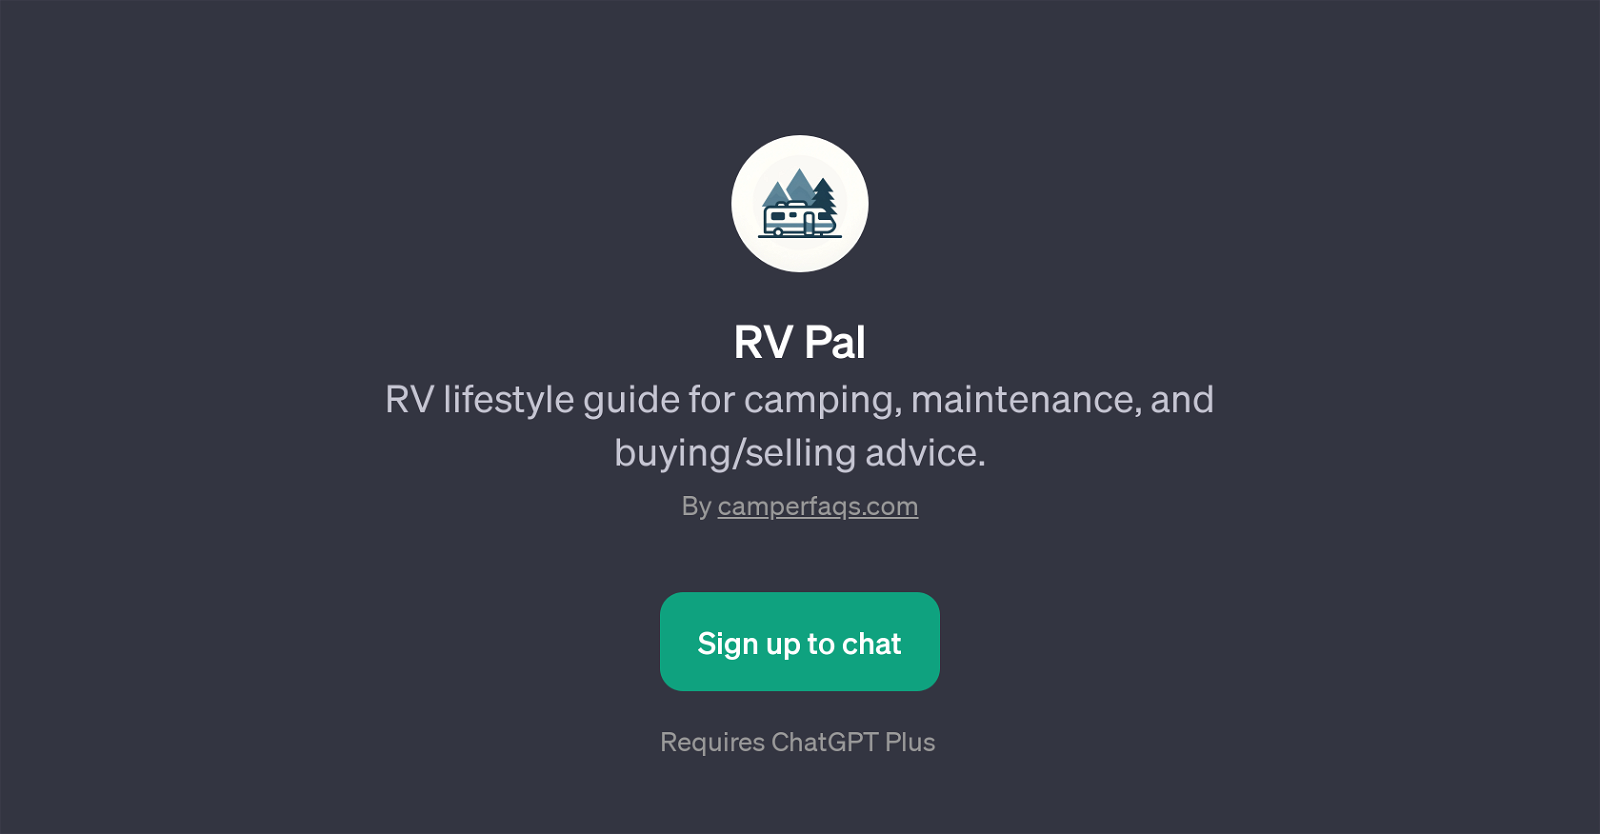 RV Pal website